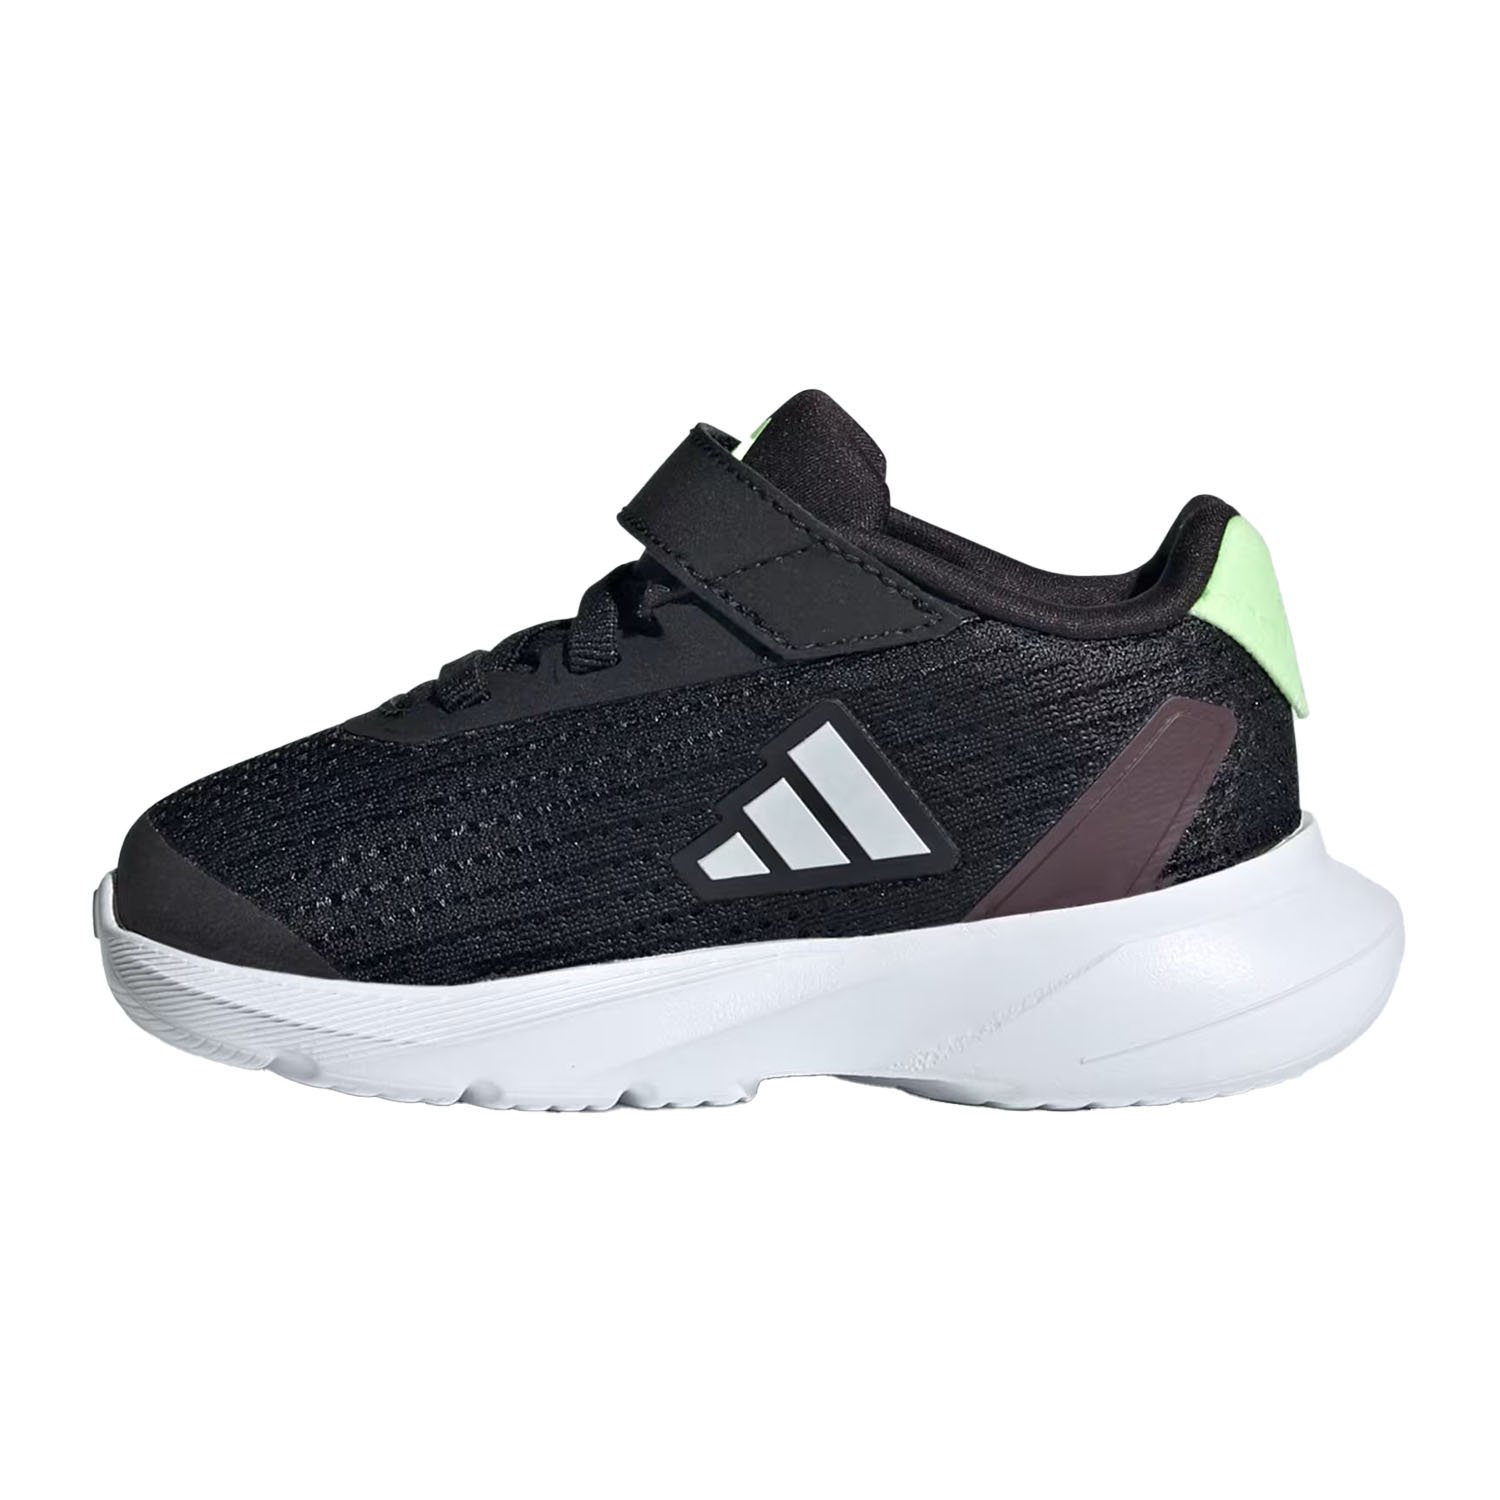 Adidas Duramo SL Çocuk Koşu Ayakkabısı - Siyah - 1